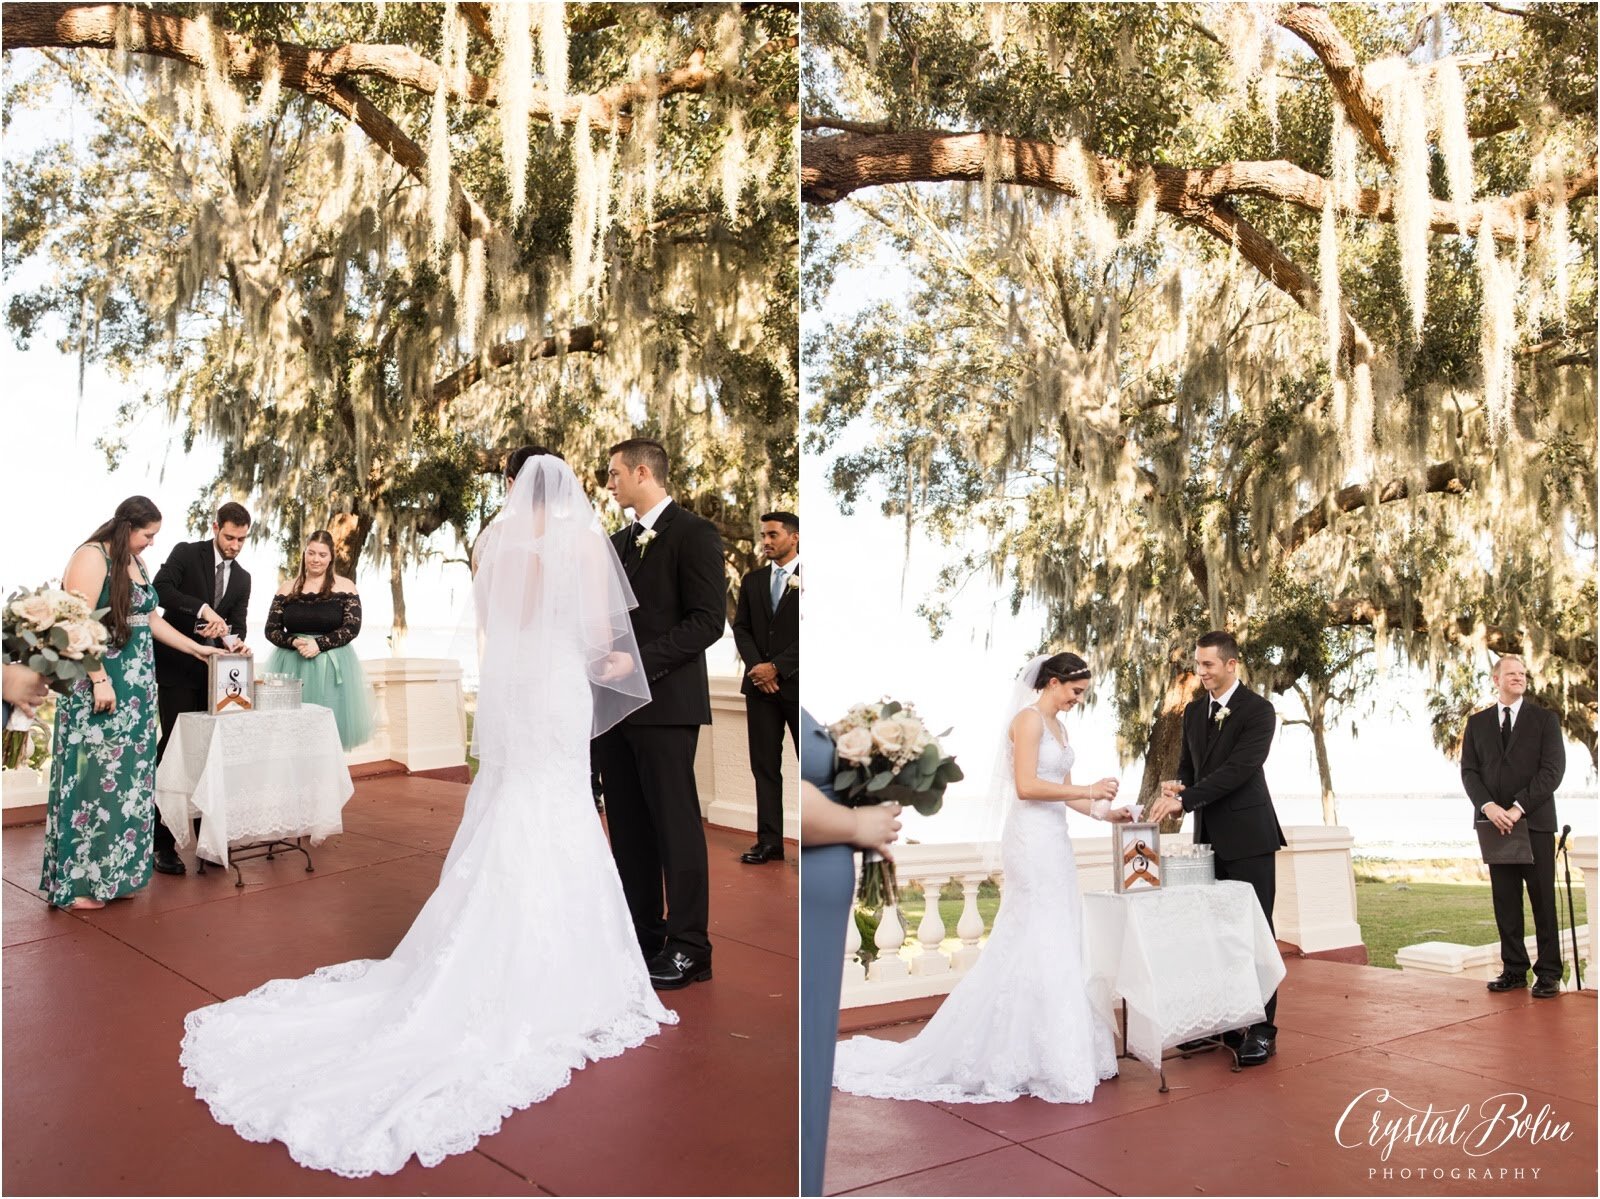 Marissa & Calvin | Wedding